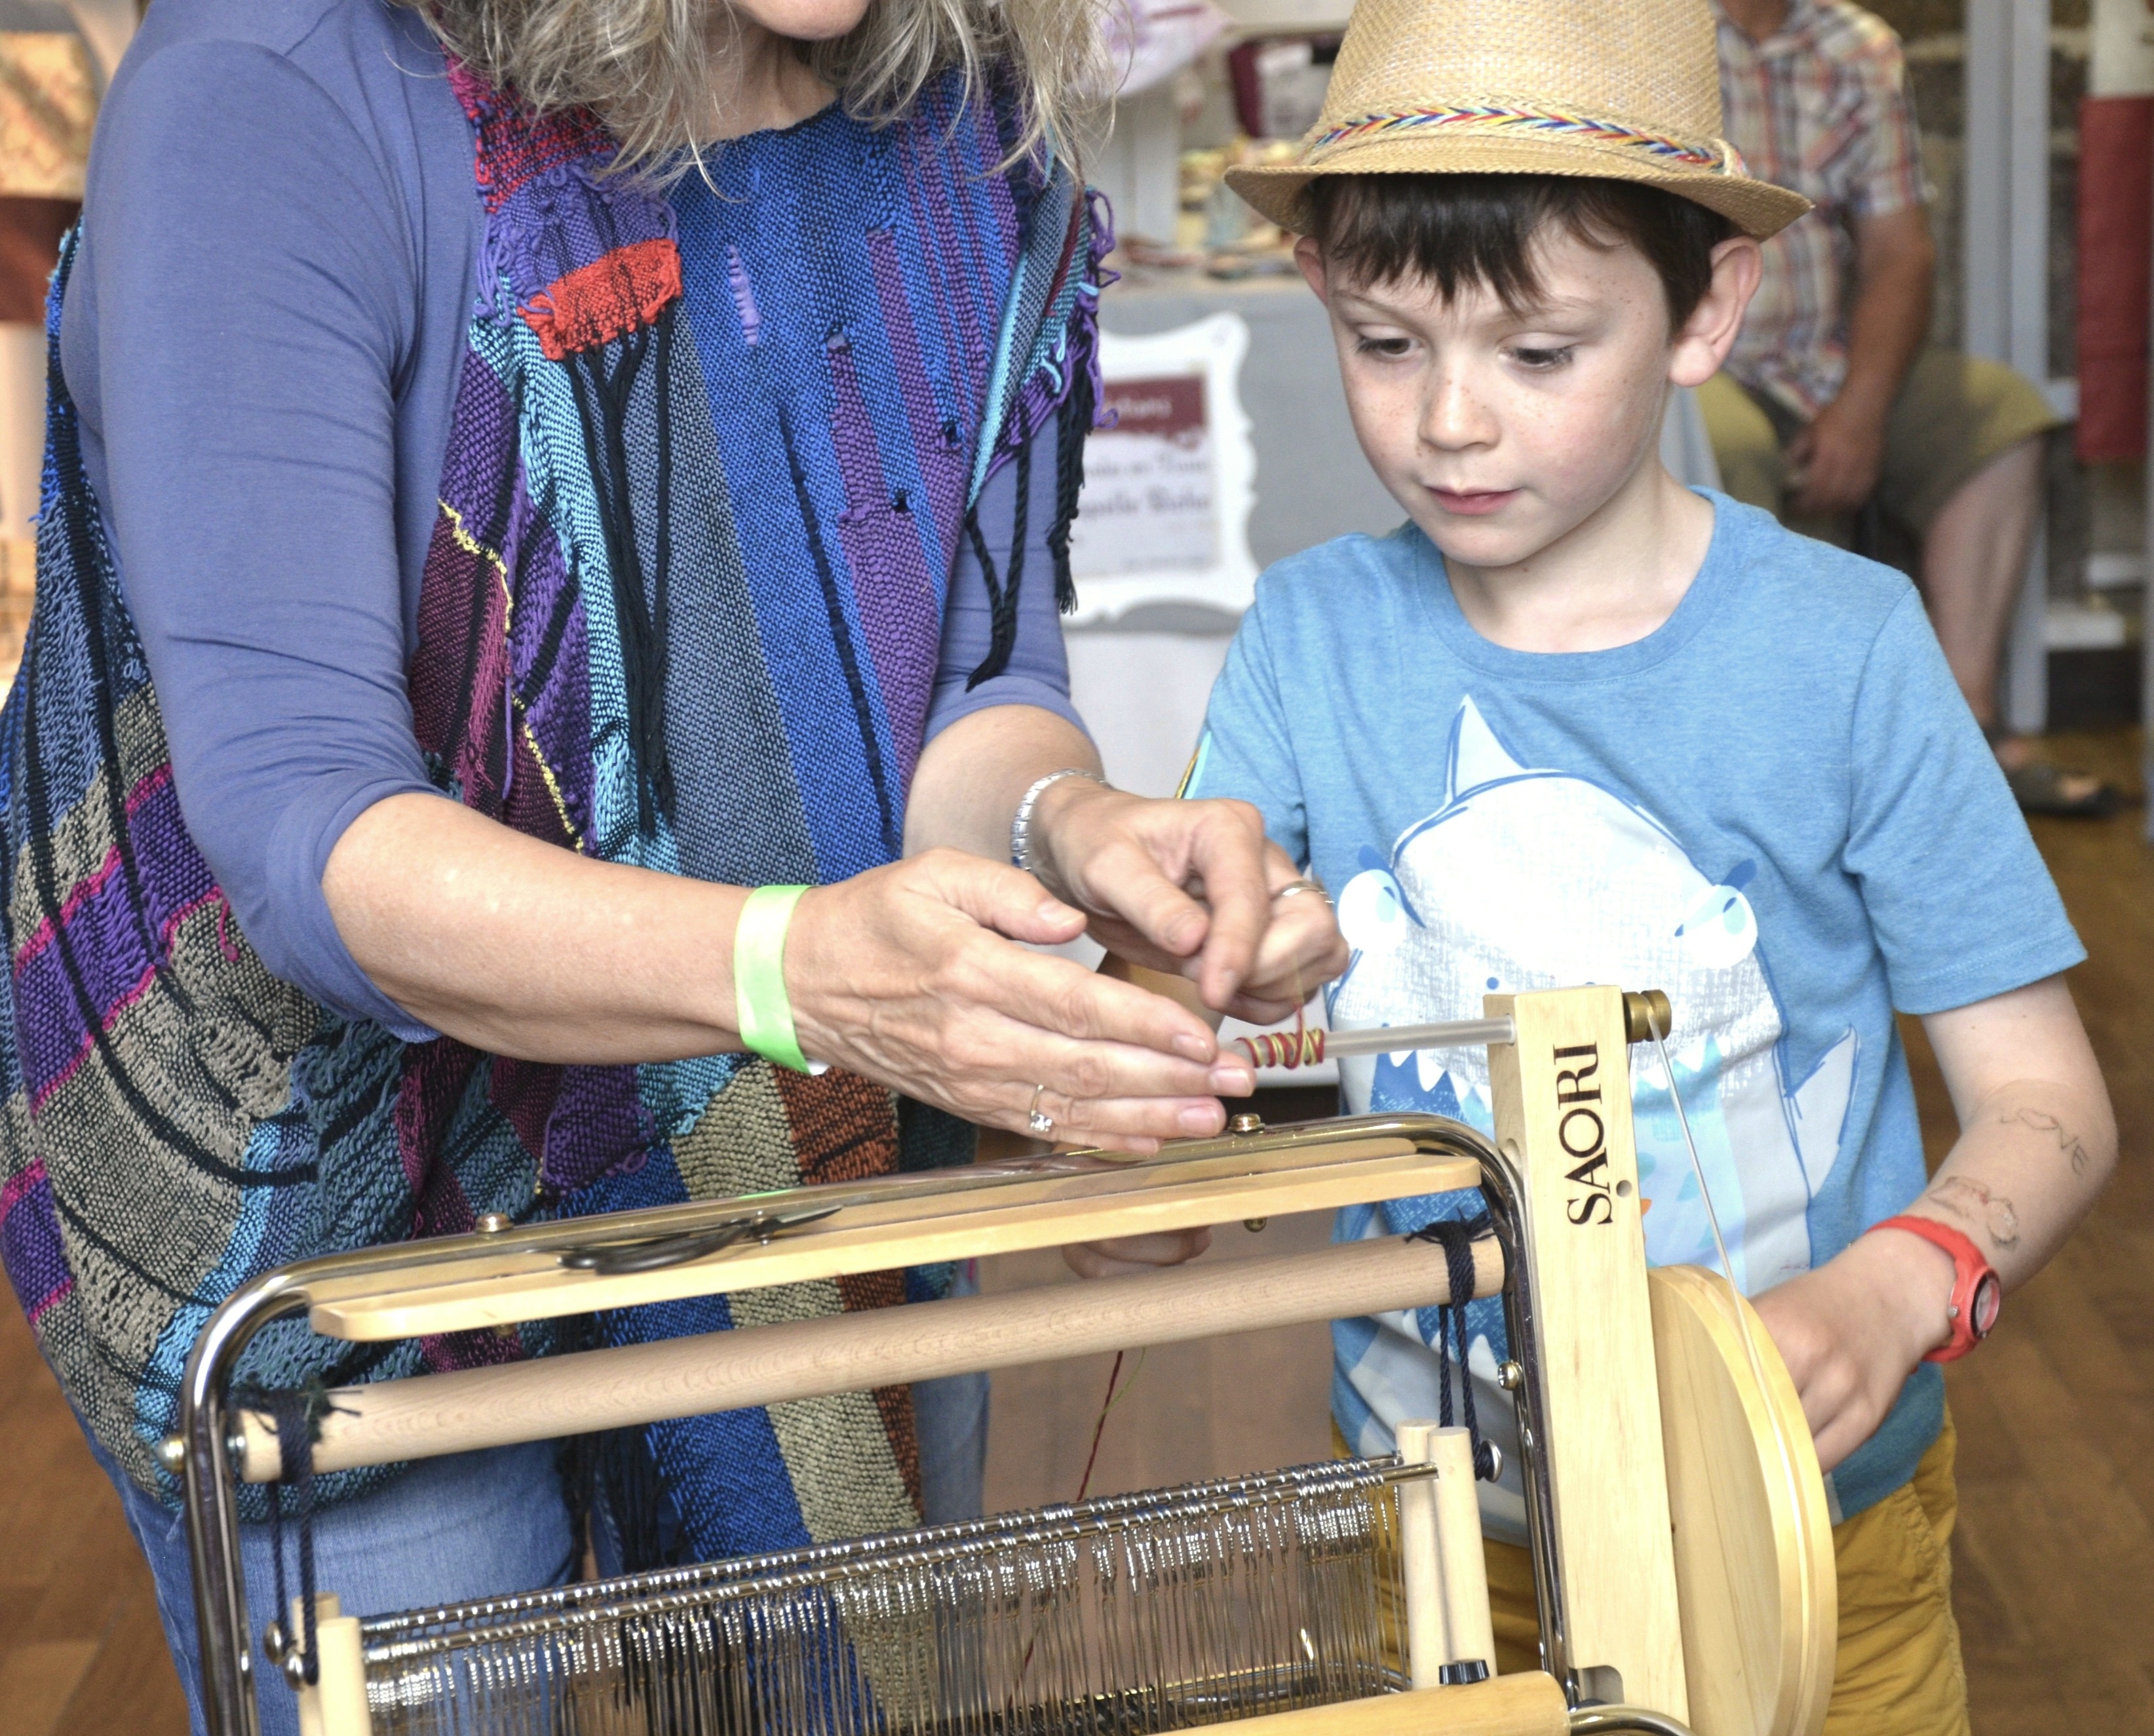 Demonstrating SAORI weaving to children, using a SAORI loom